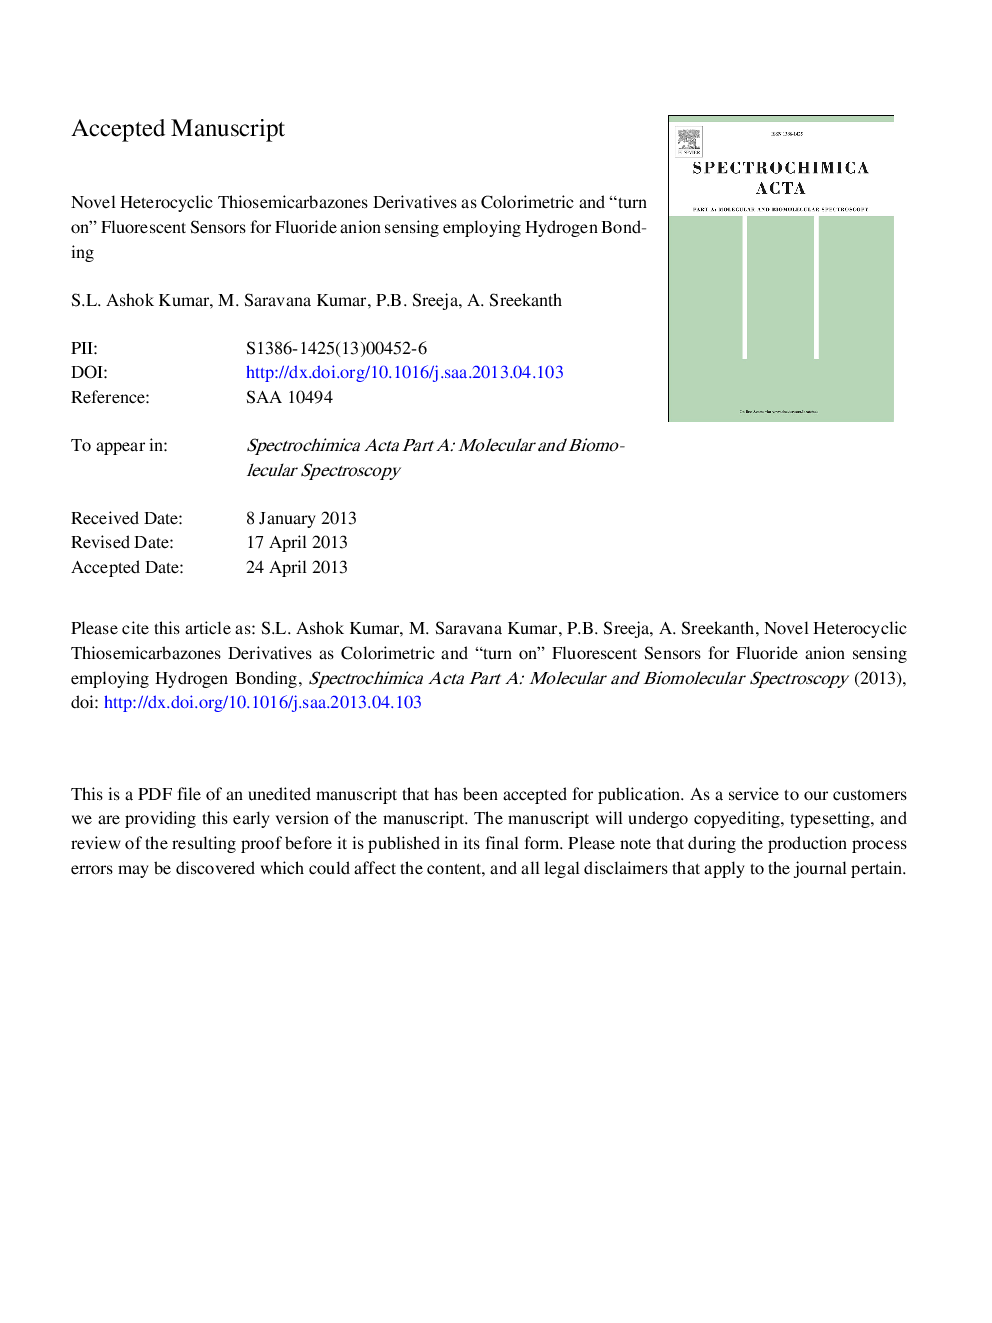 Novel heterocyclic thiosemicarbazones derivatives as colorimetric and “turn on” fluorescent sensors for fluoride anion sensing employing hydrogen bonding